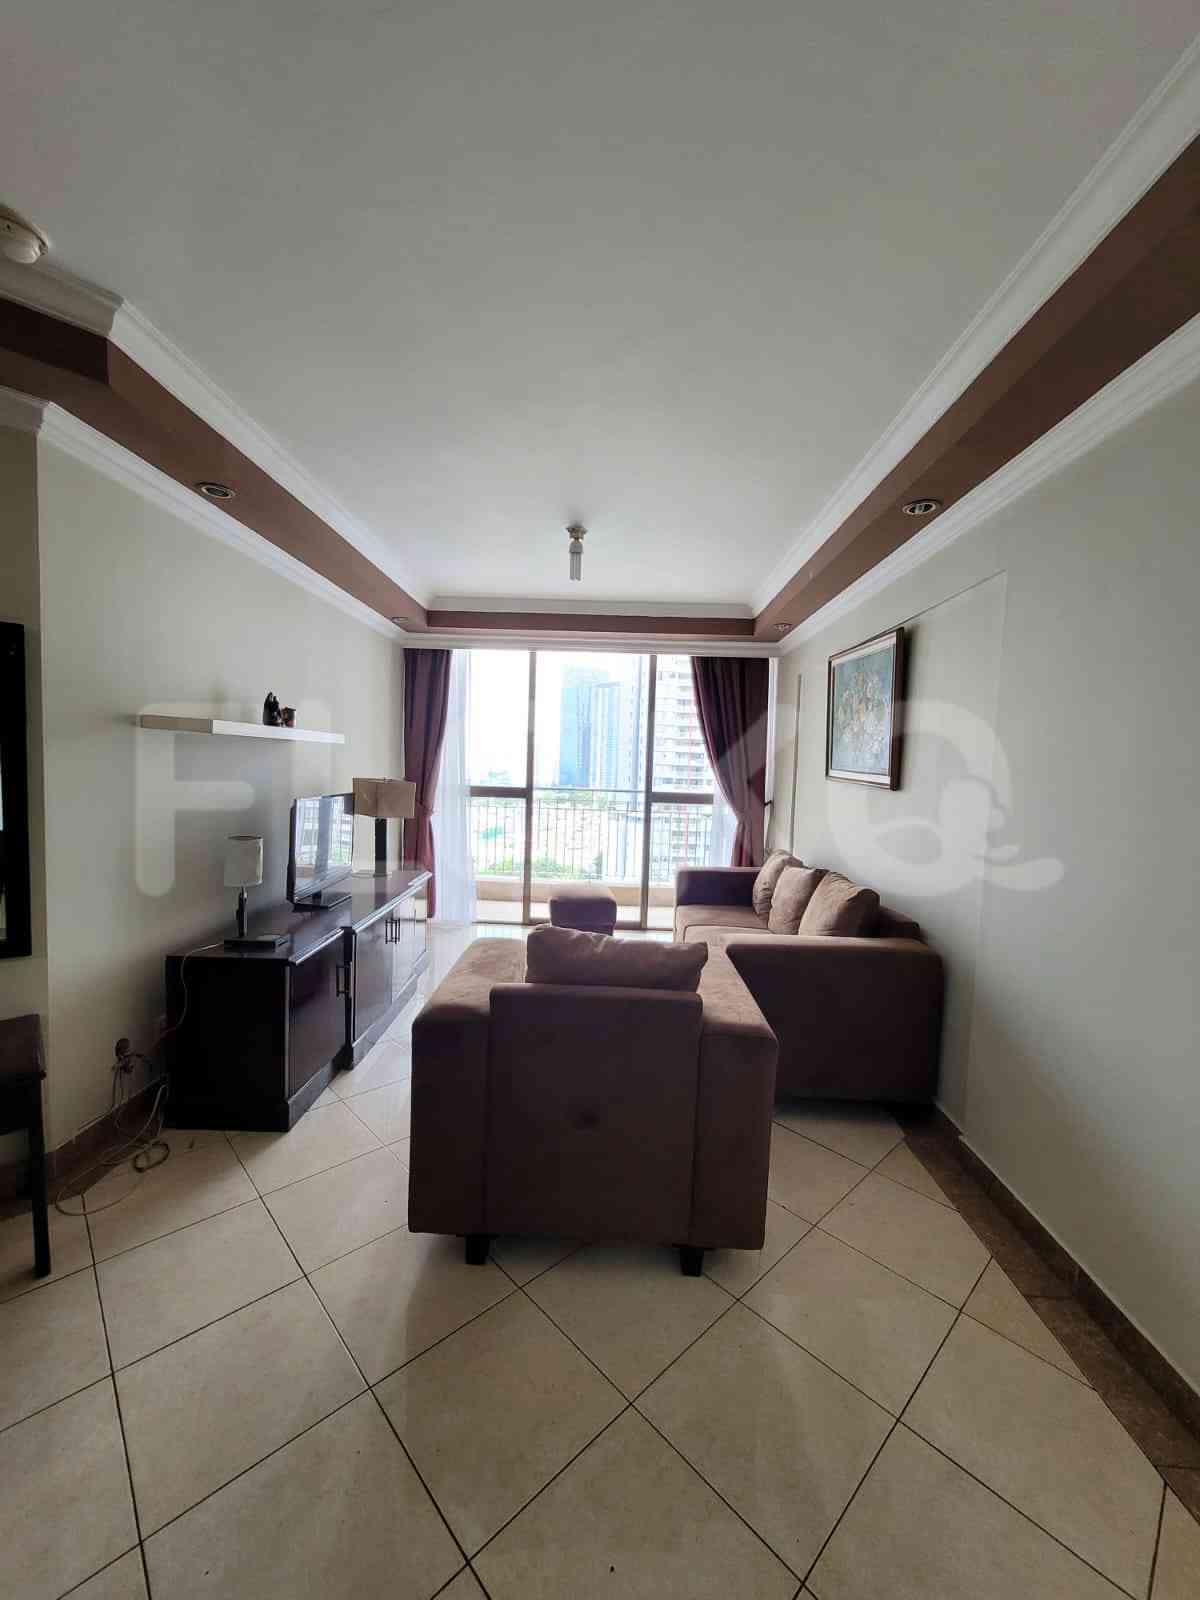 2 Bedroom on 16th Floor for Rent in Taman Rasuna Apartment - fkub1c 2